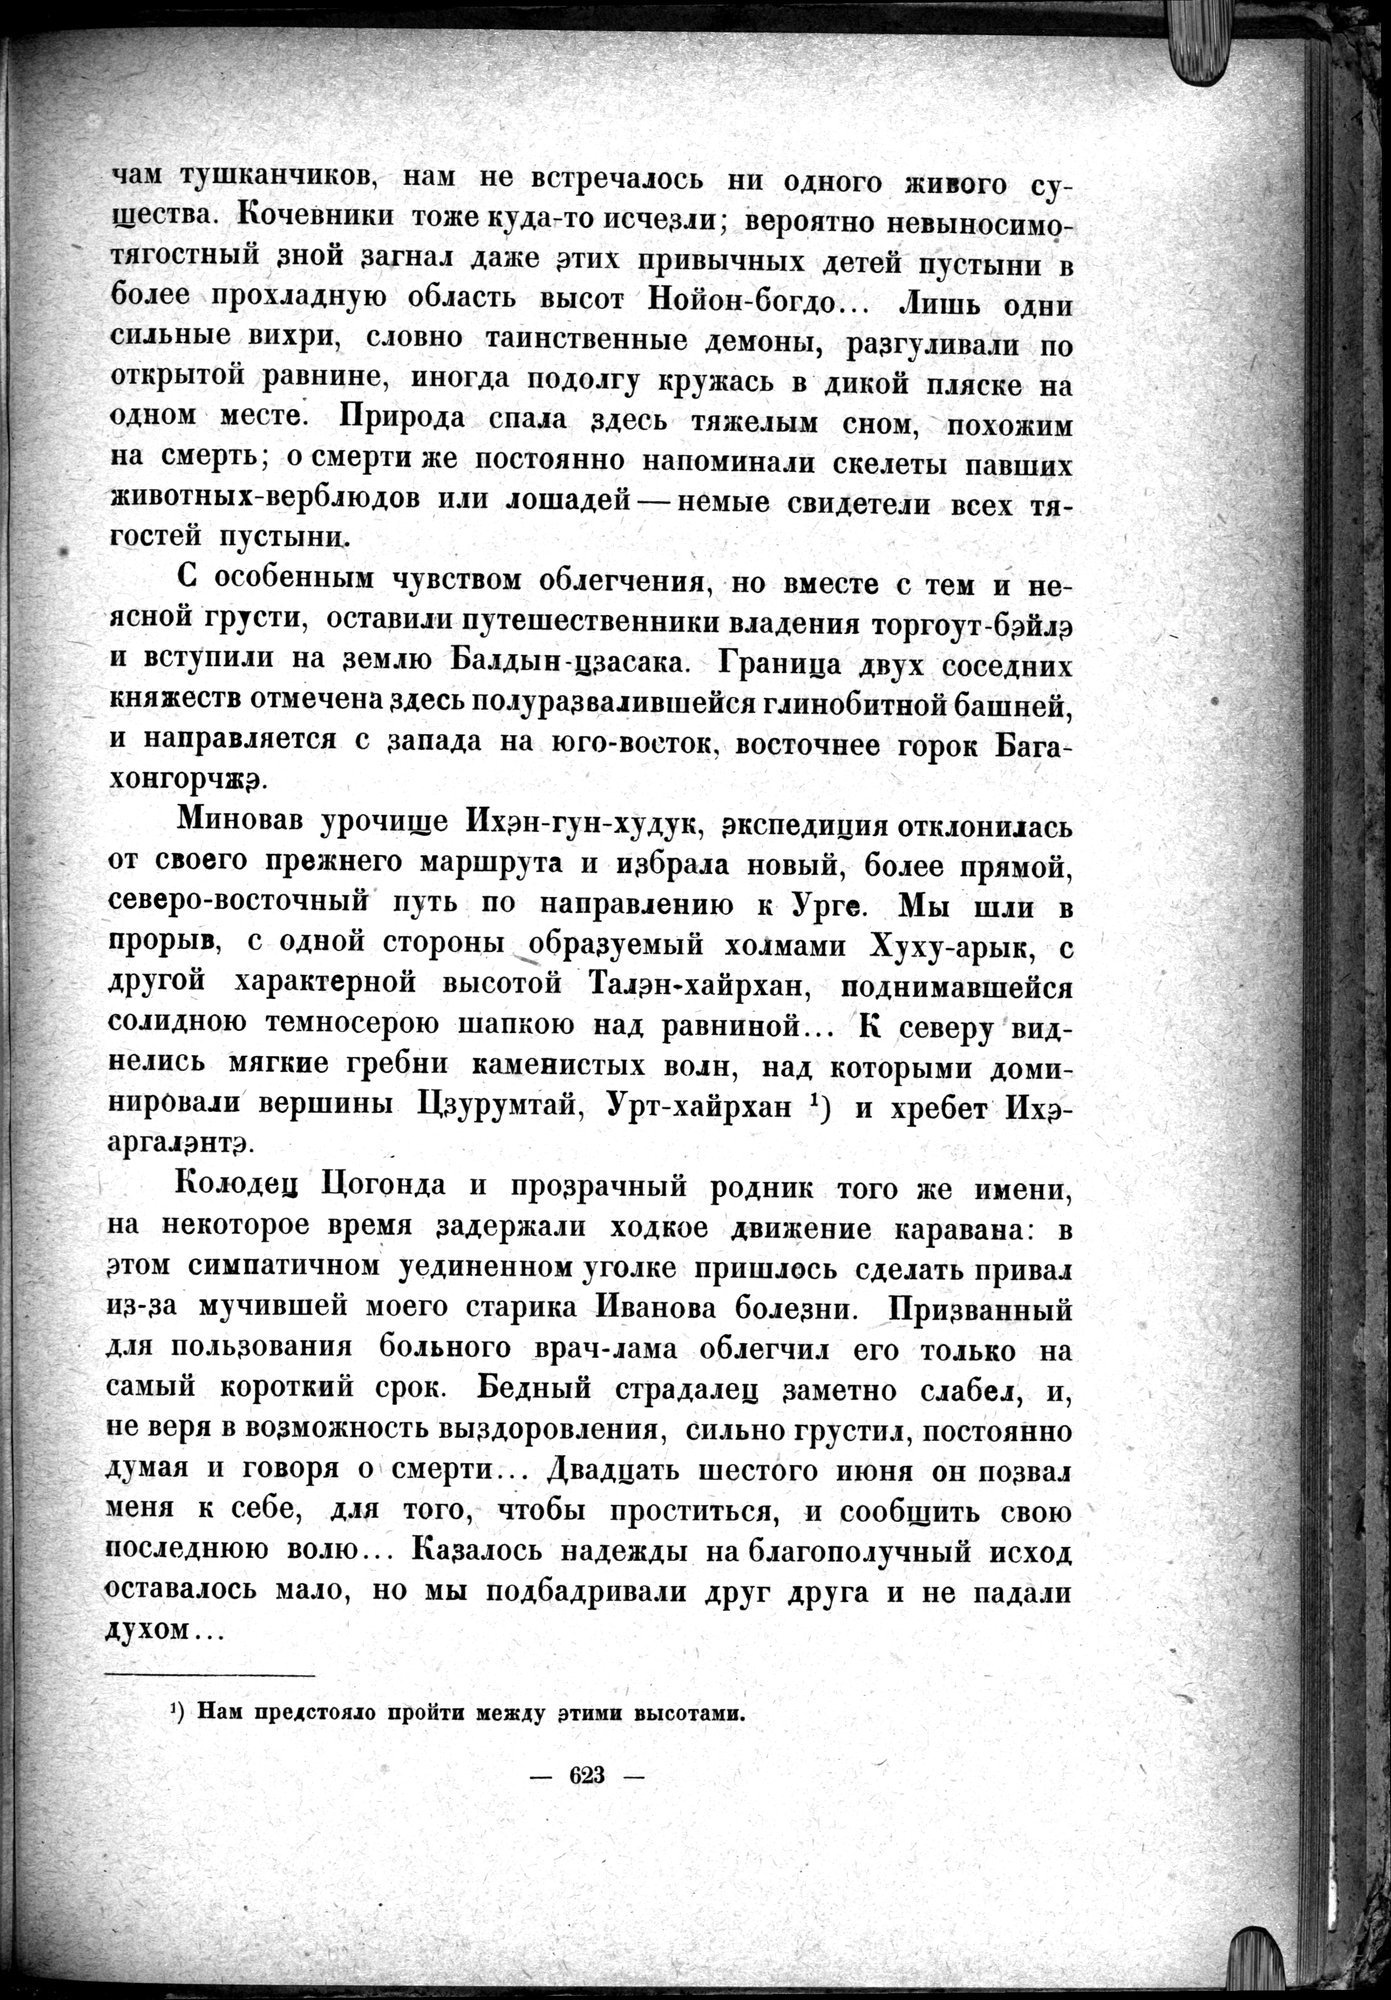 Mongoliya i Amdo i mertby gorod Khara-Khoto : vol.1 / Page 713 (Grayscale High Resolution Image)